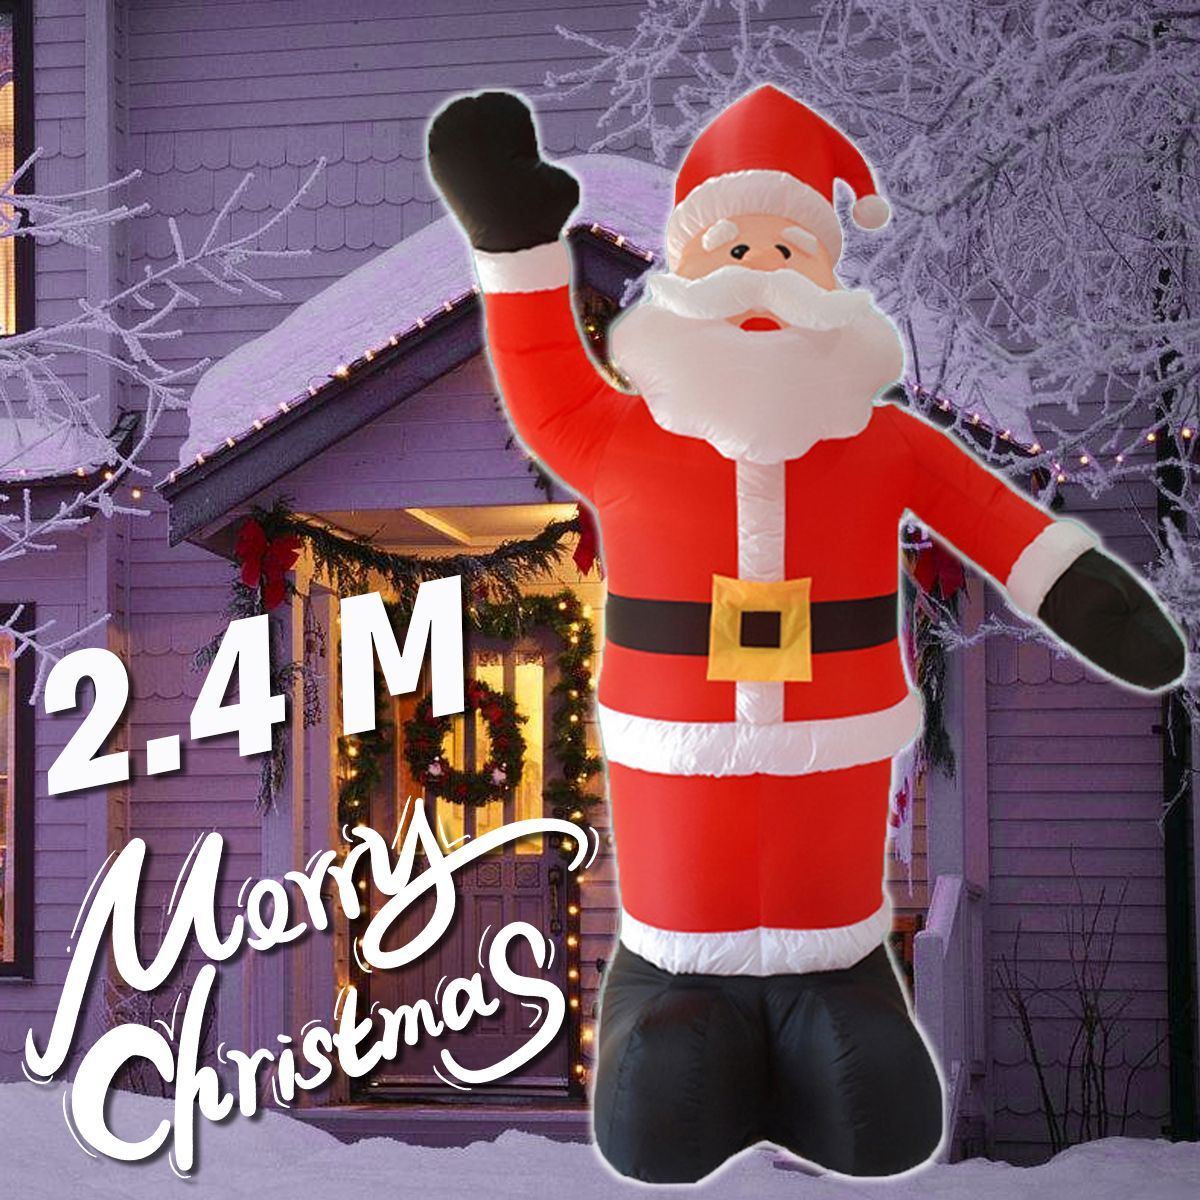 24M-Tall-Inflatable-Santa-Claus-Xmas-Christmas-Decorations-Garden-Outdoor-1573458